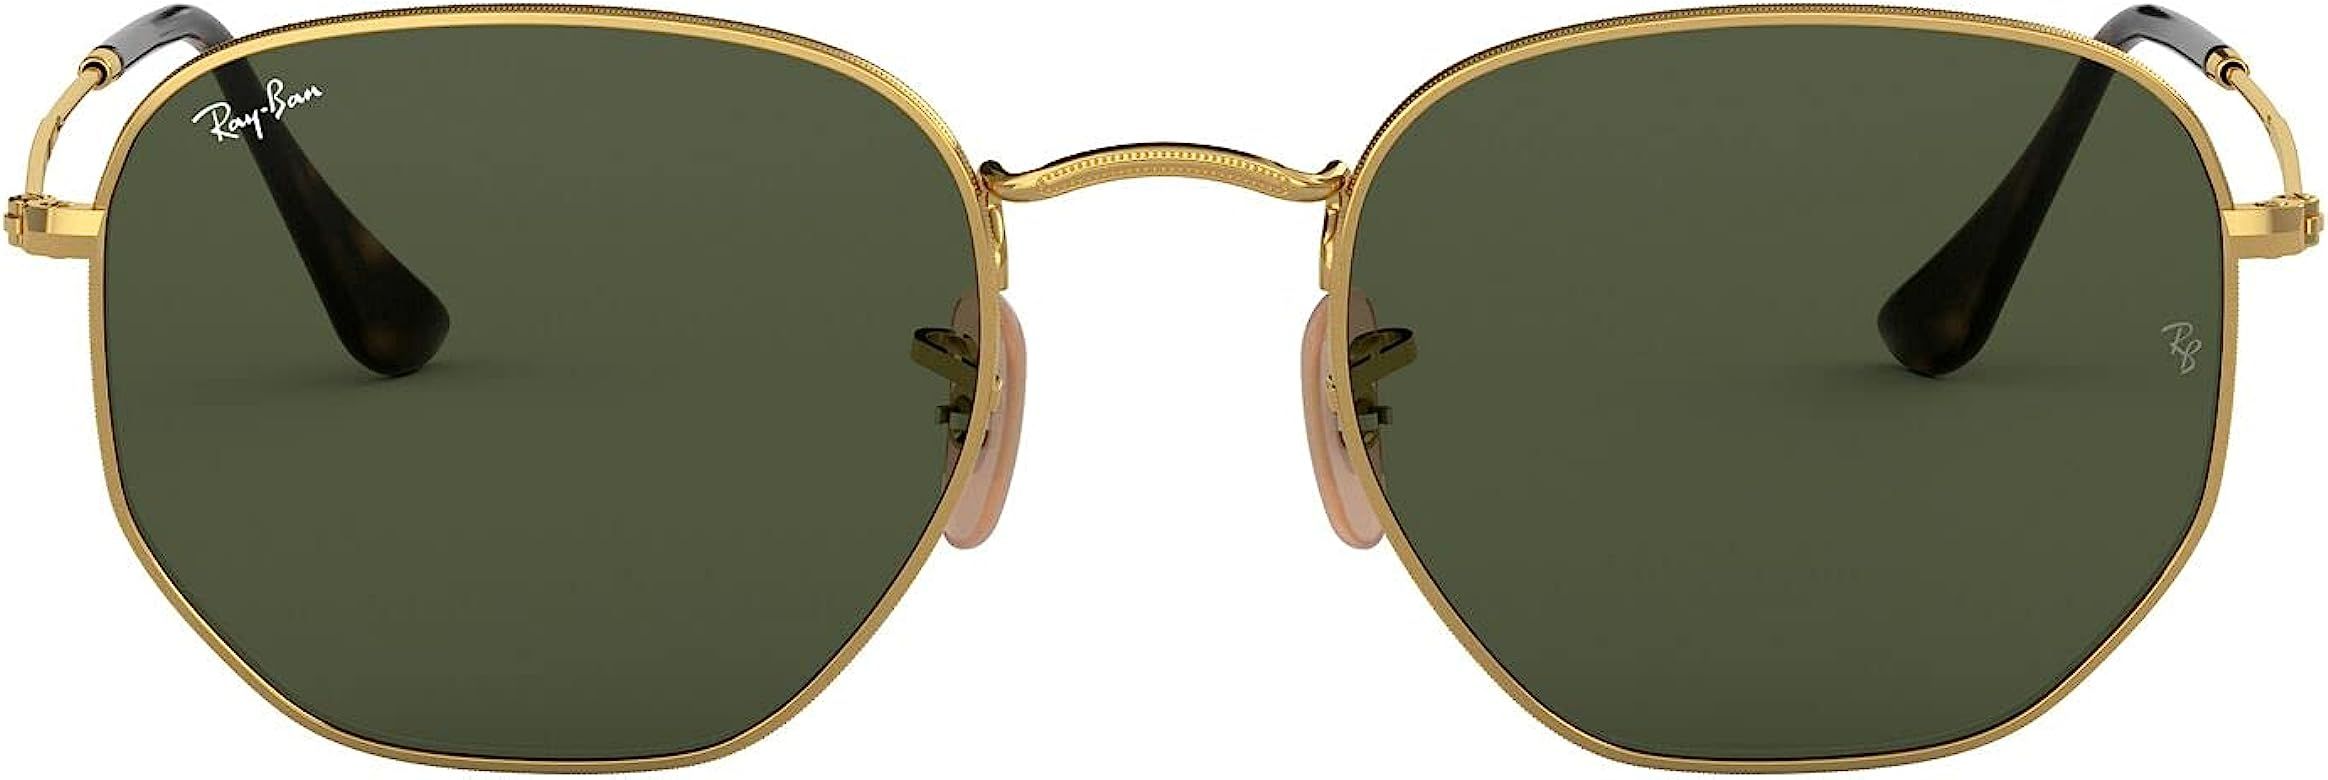 Ray-Ban Sunglasses | Amazon (UK)